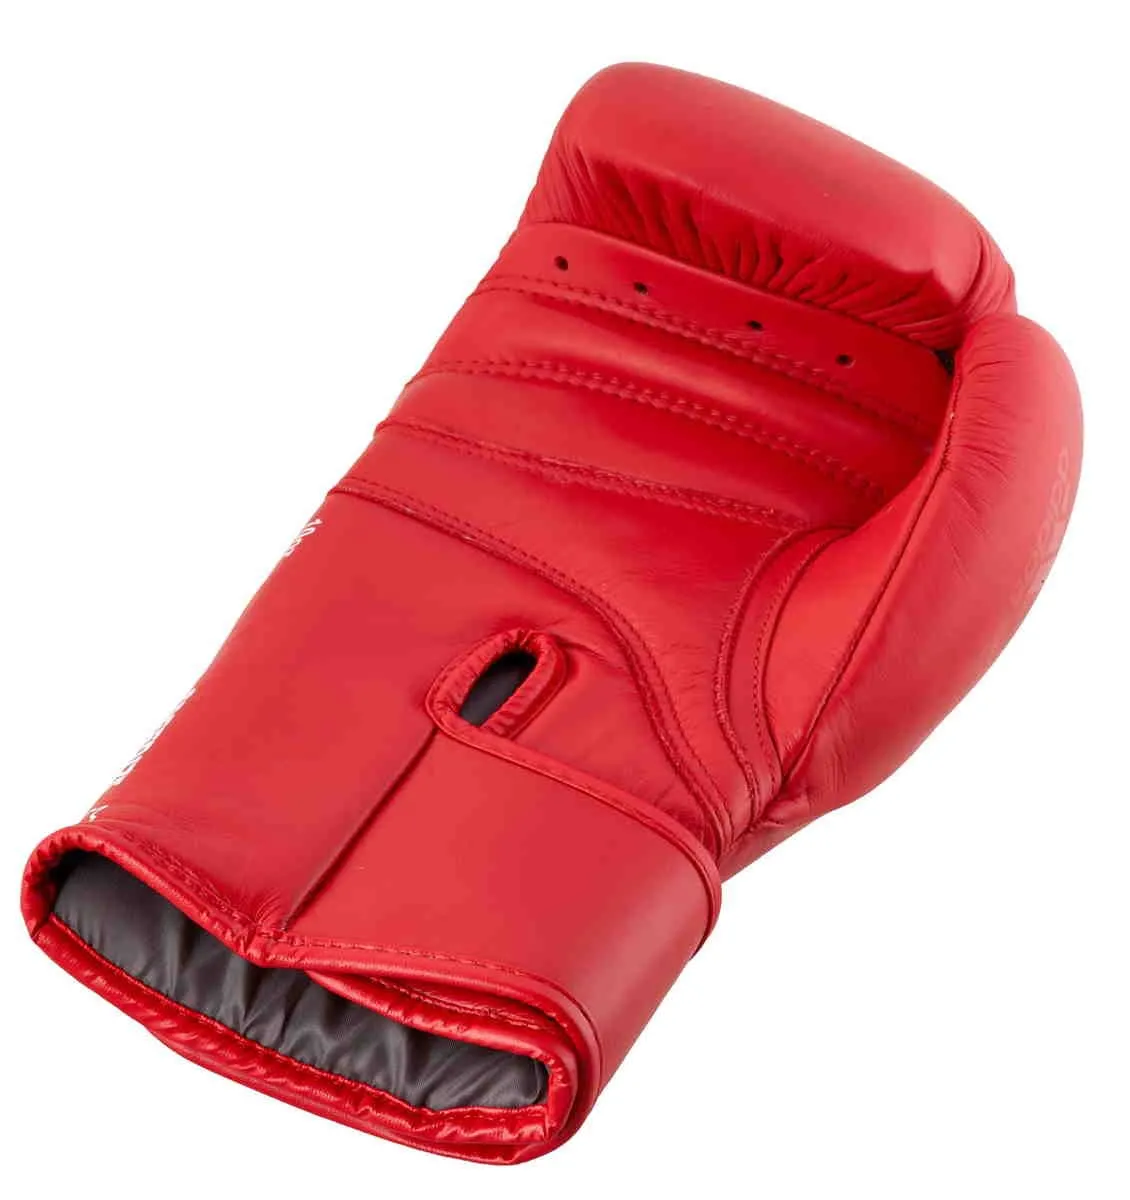 Gants de boxe adidas Speed 175 cuir rouge